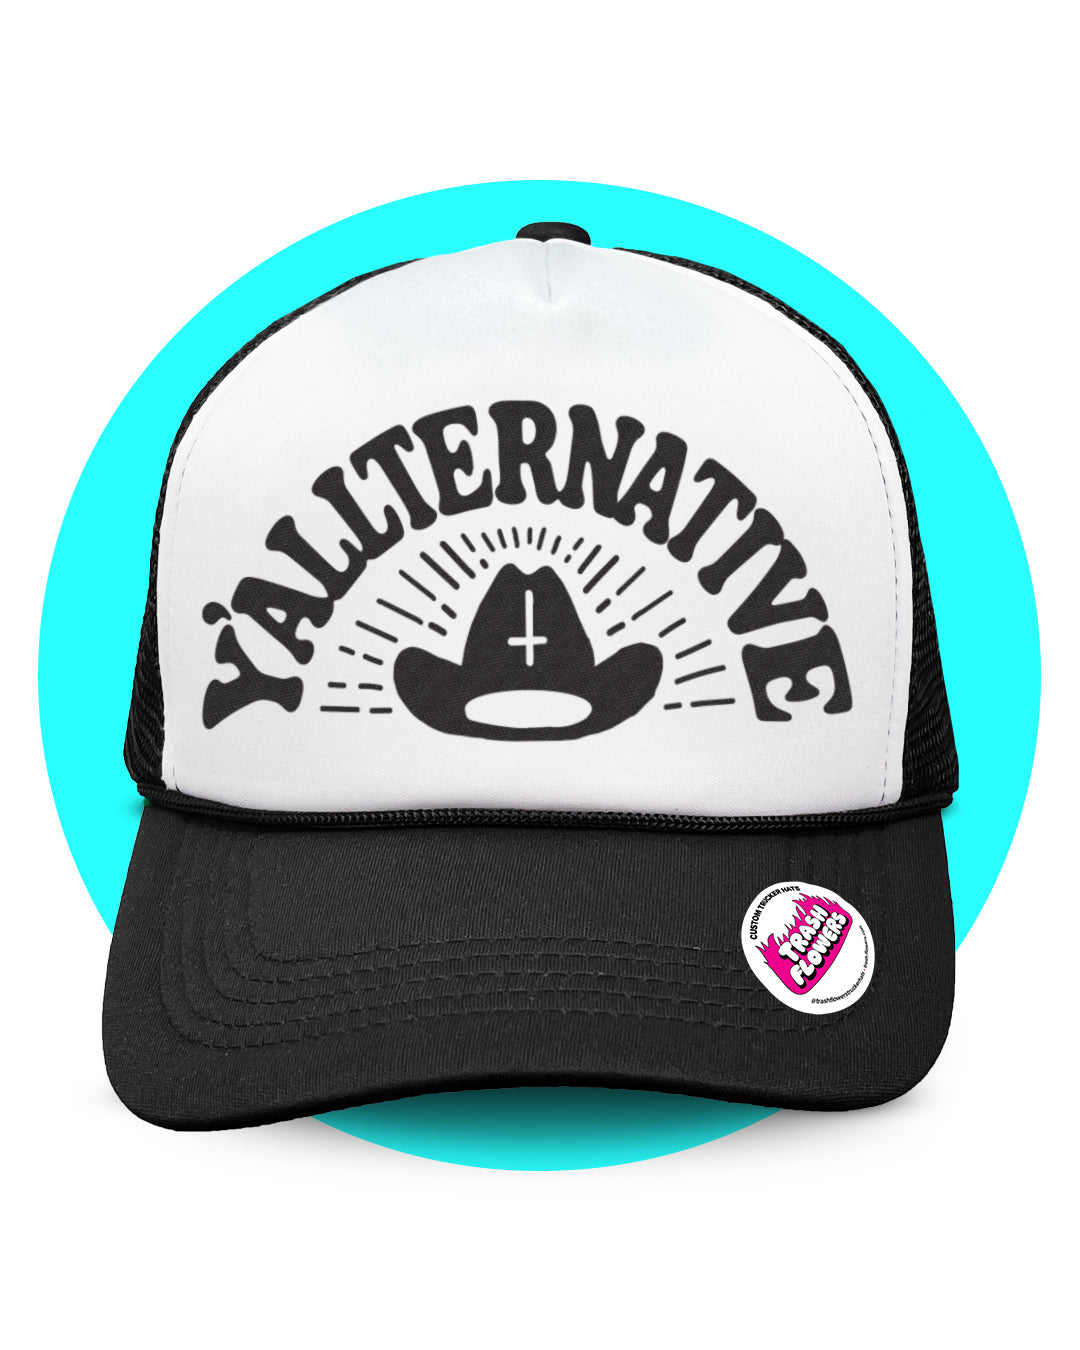 Y'allternative Trucker Hat